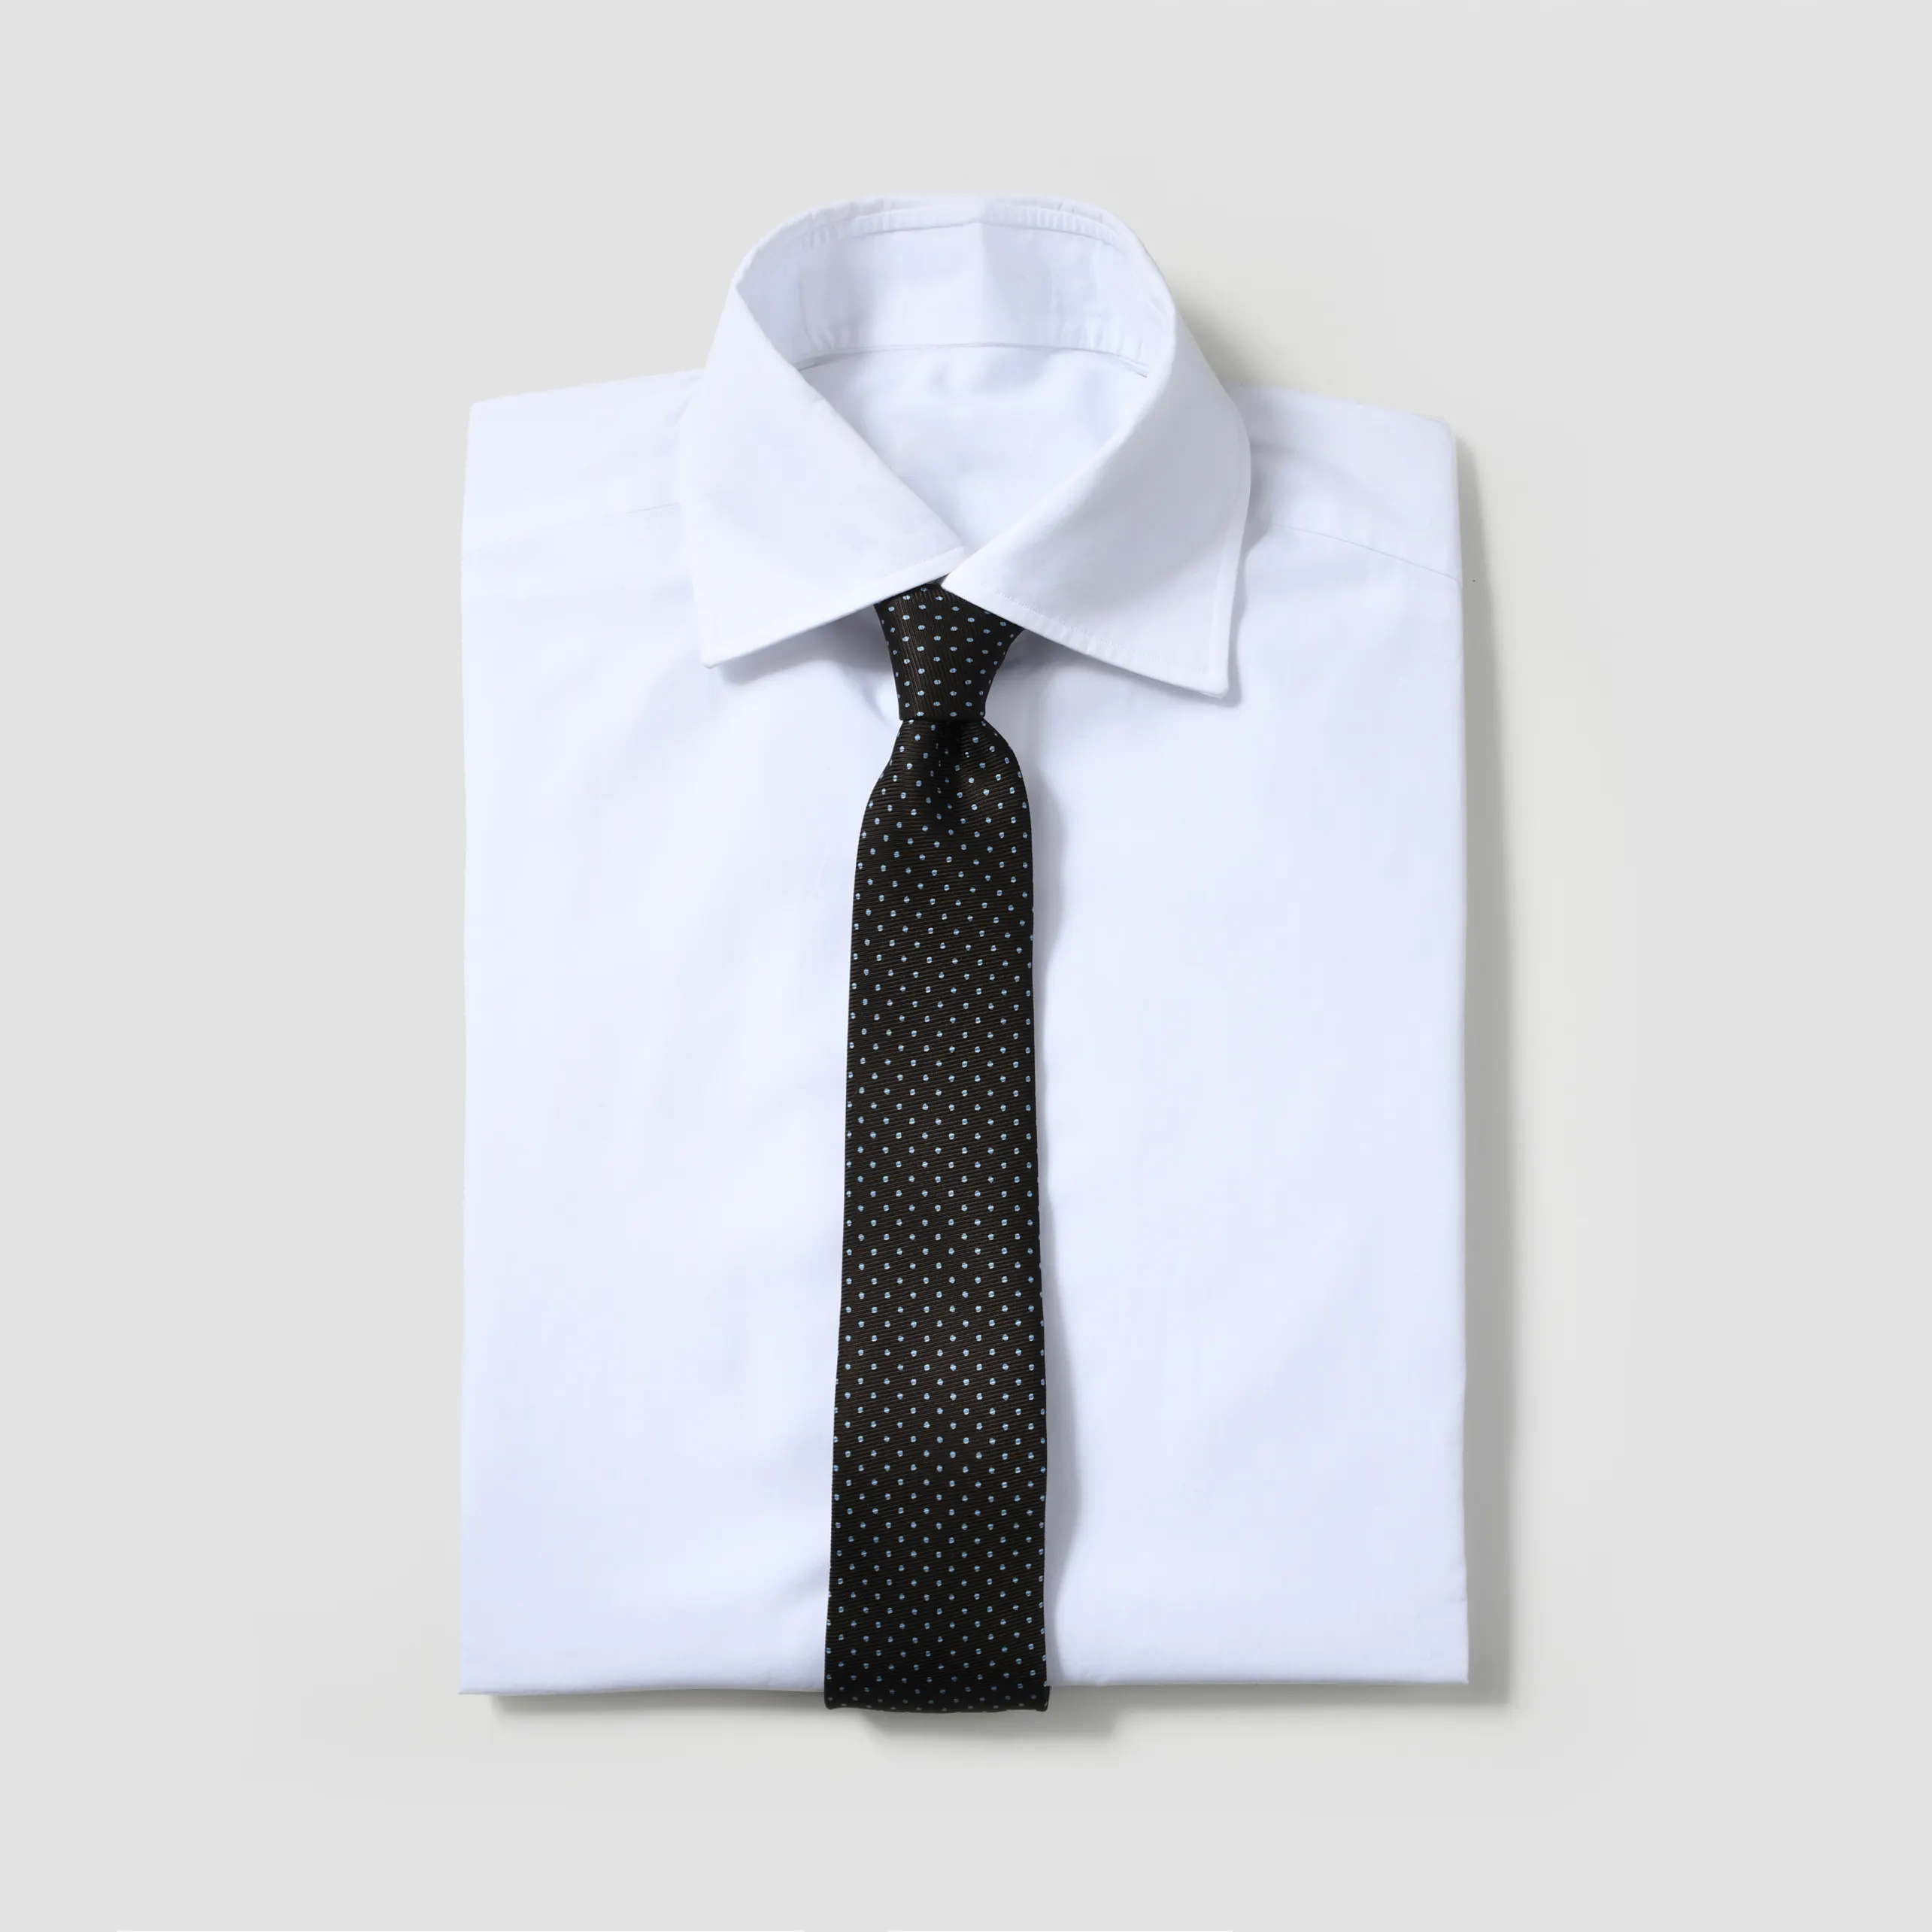 Gravata de seda masculina exclusiva - Preço de luxo no atacado - Chocolate e Cerulean cores sob medida